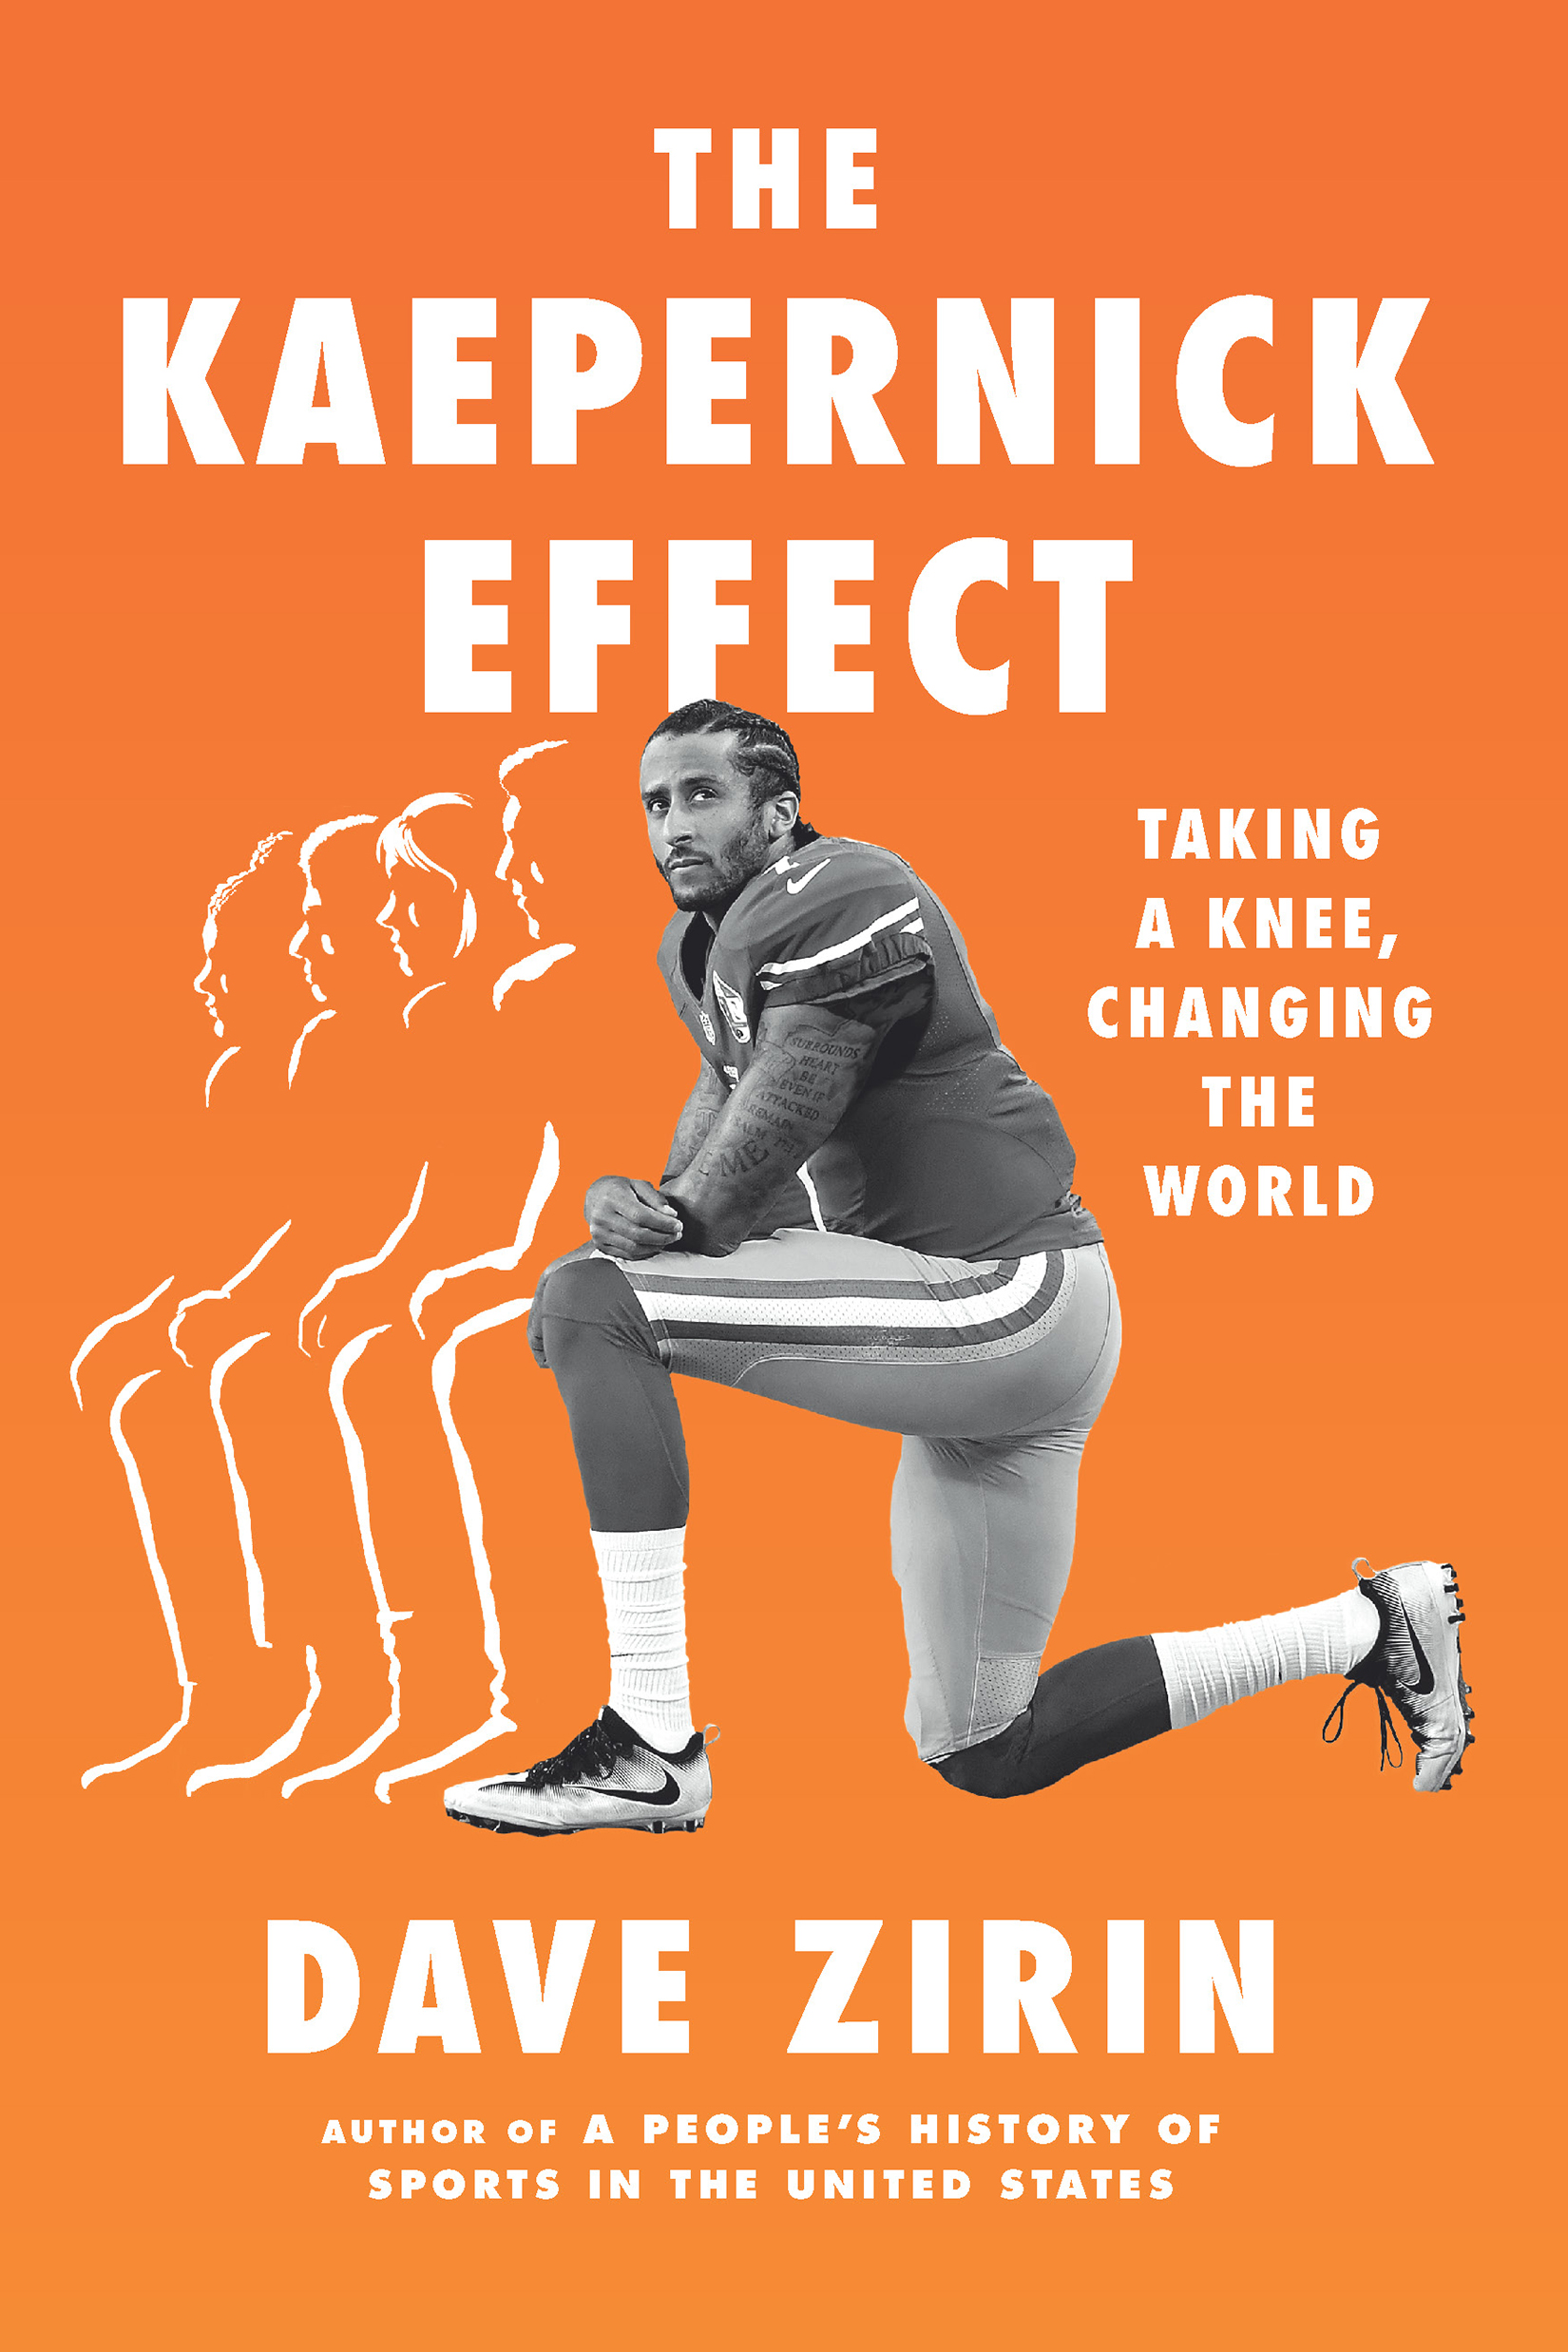 Kaepernick Effect, Dave Zirin